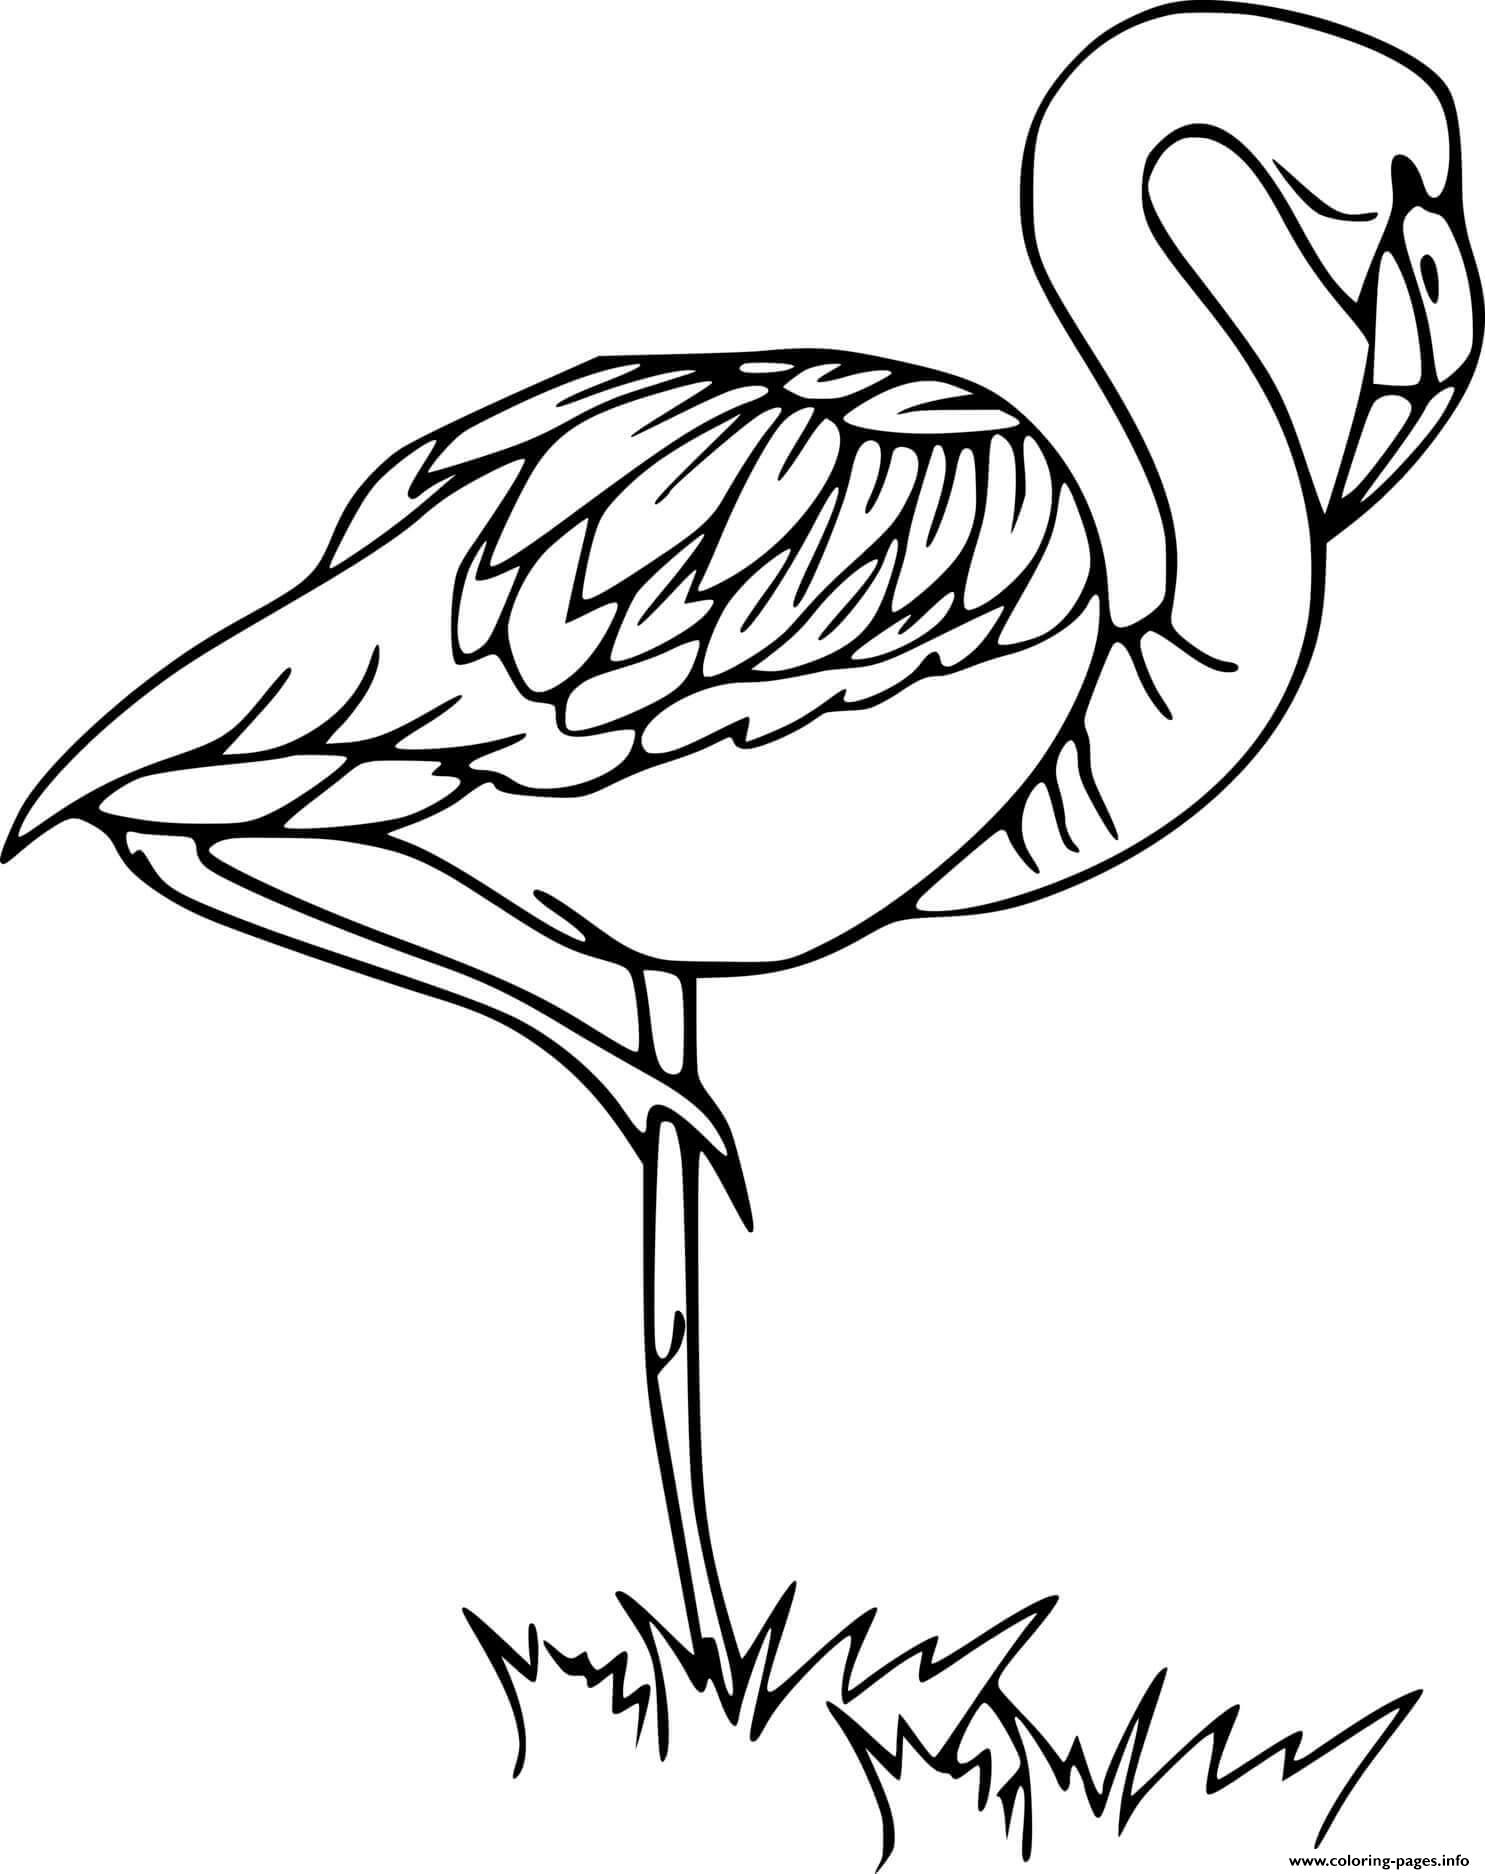 James Flamingo coloring